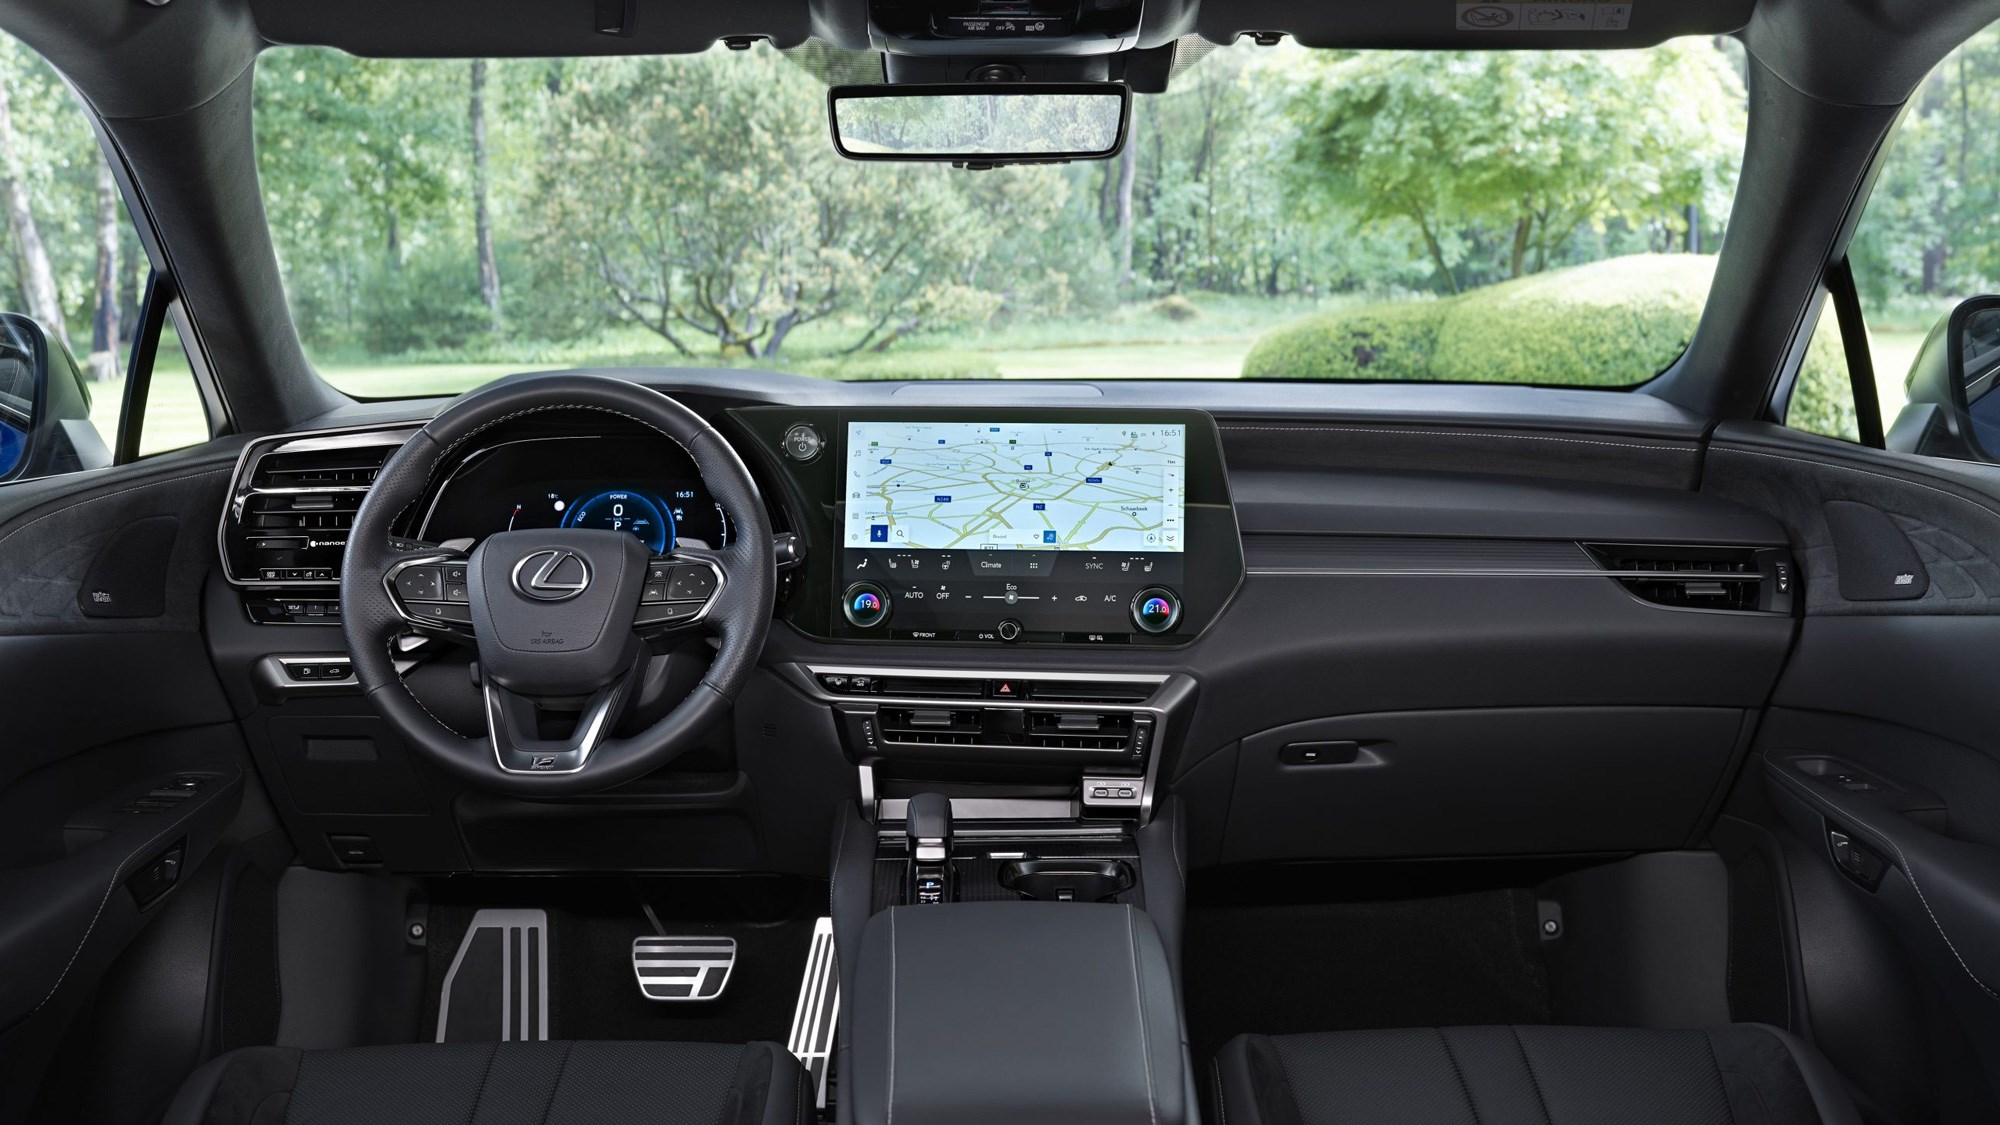 Lexus Apple CarPlay and Android Auto upgrade - Lexus UK Magazine